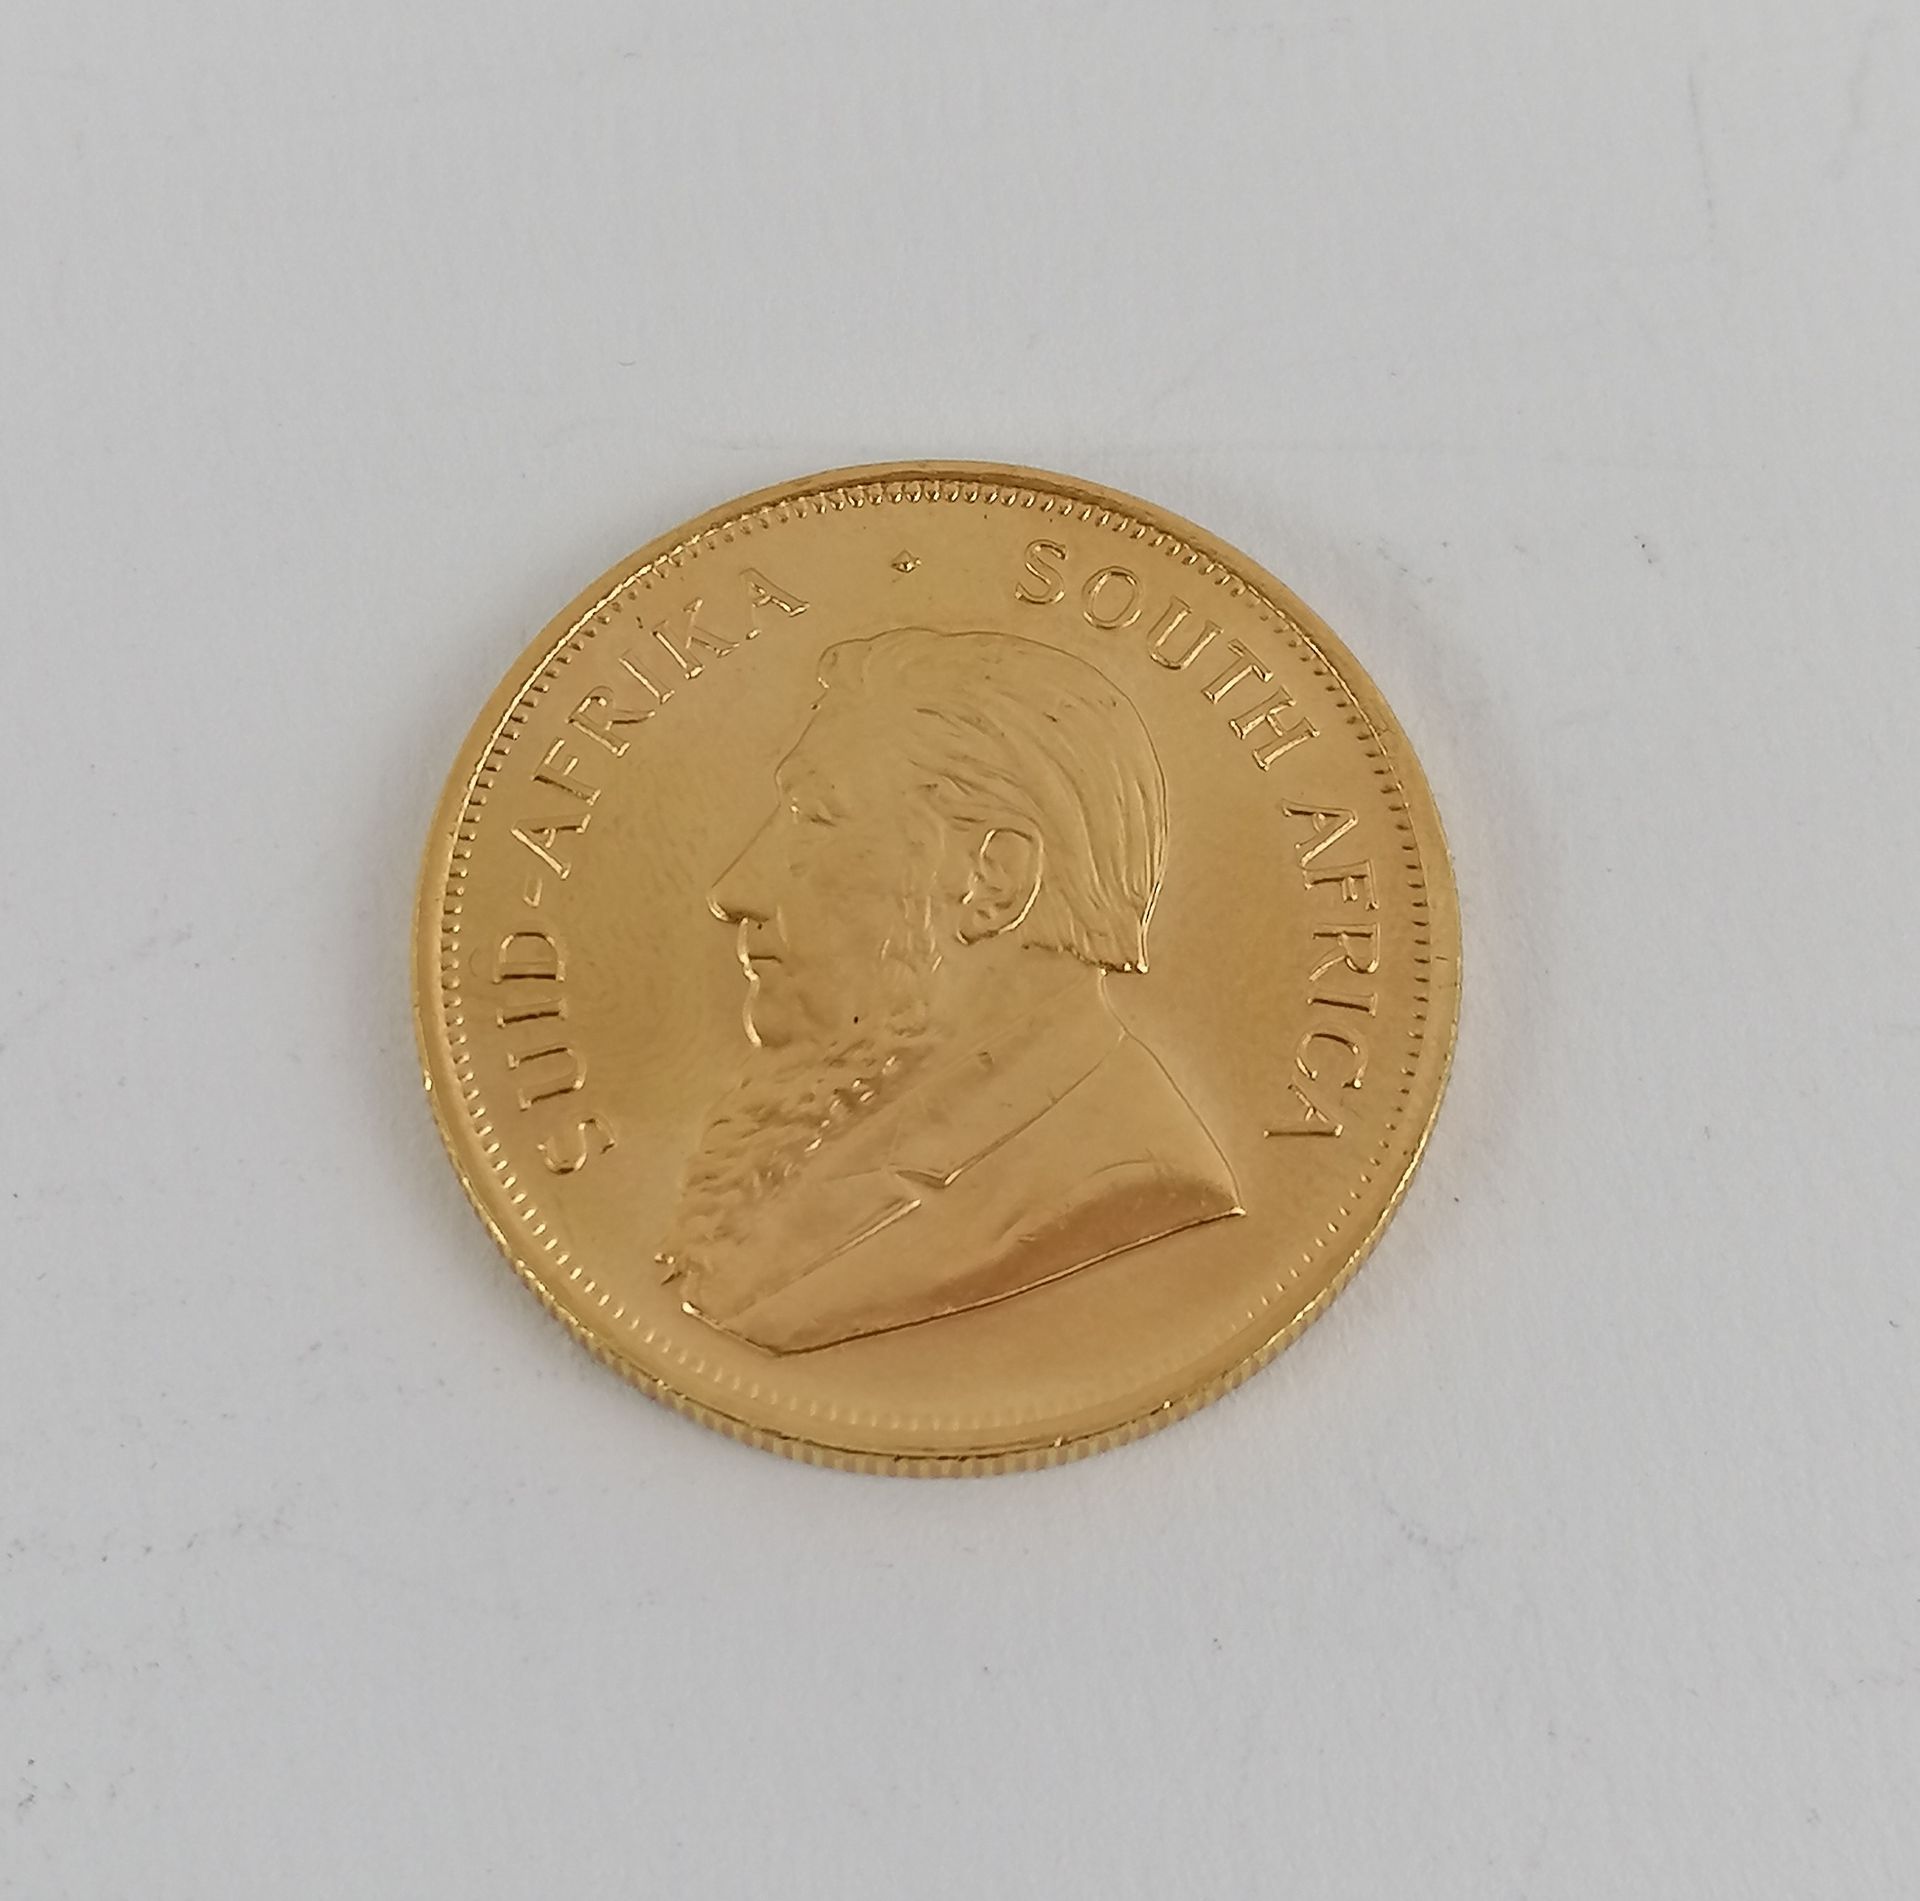 Null A gold coin South Africa Kruggerand 1983.
Weight : 34 g